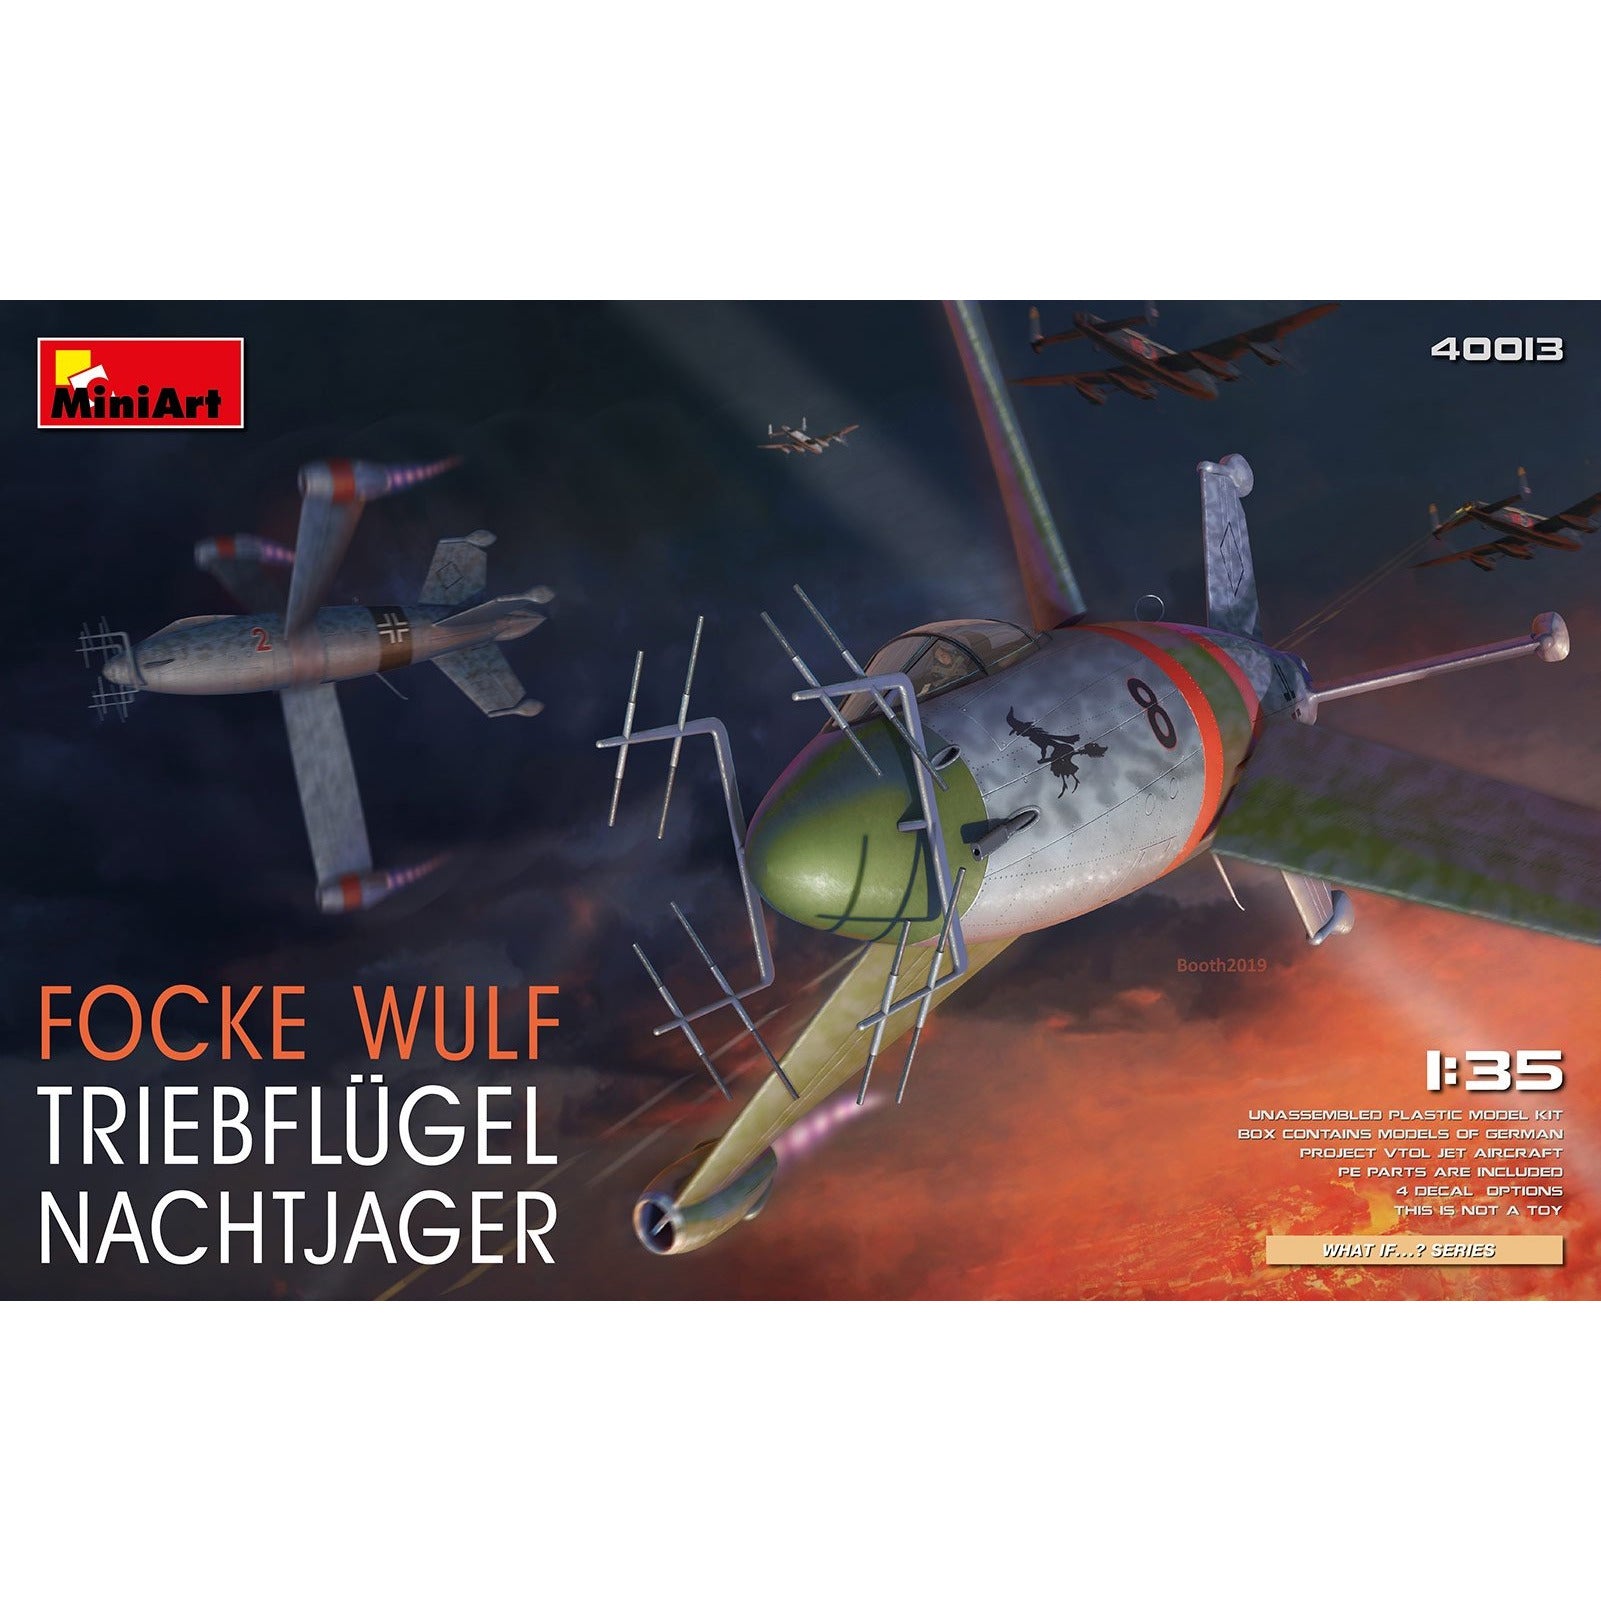 Focke-Wulf Triebflugel Nachtjager 1/35 by Miniart